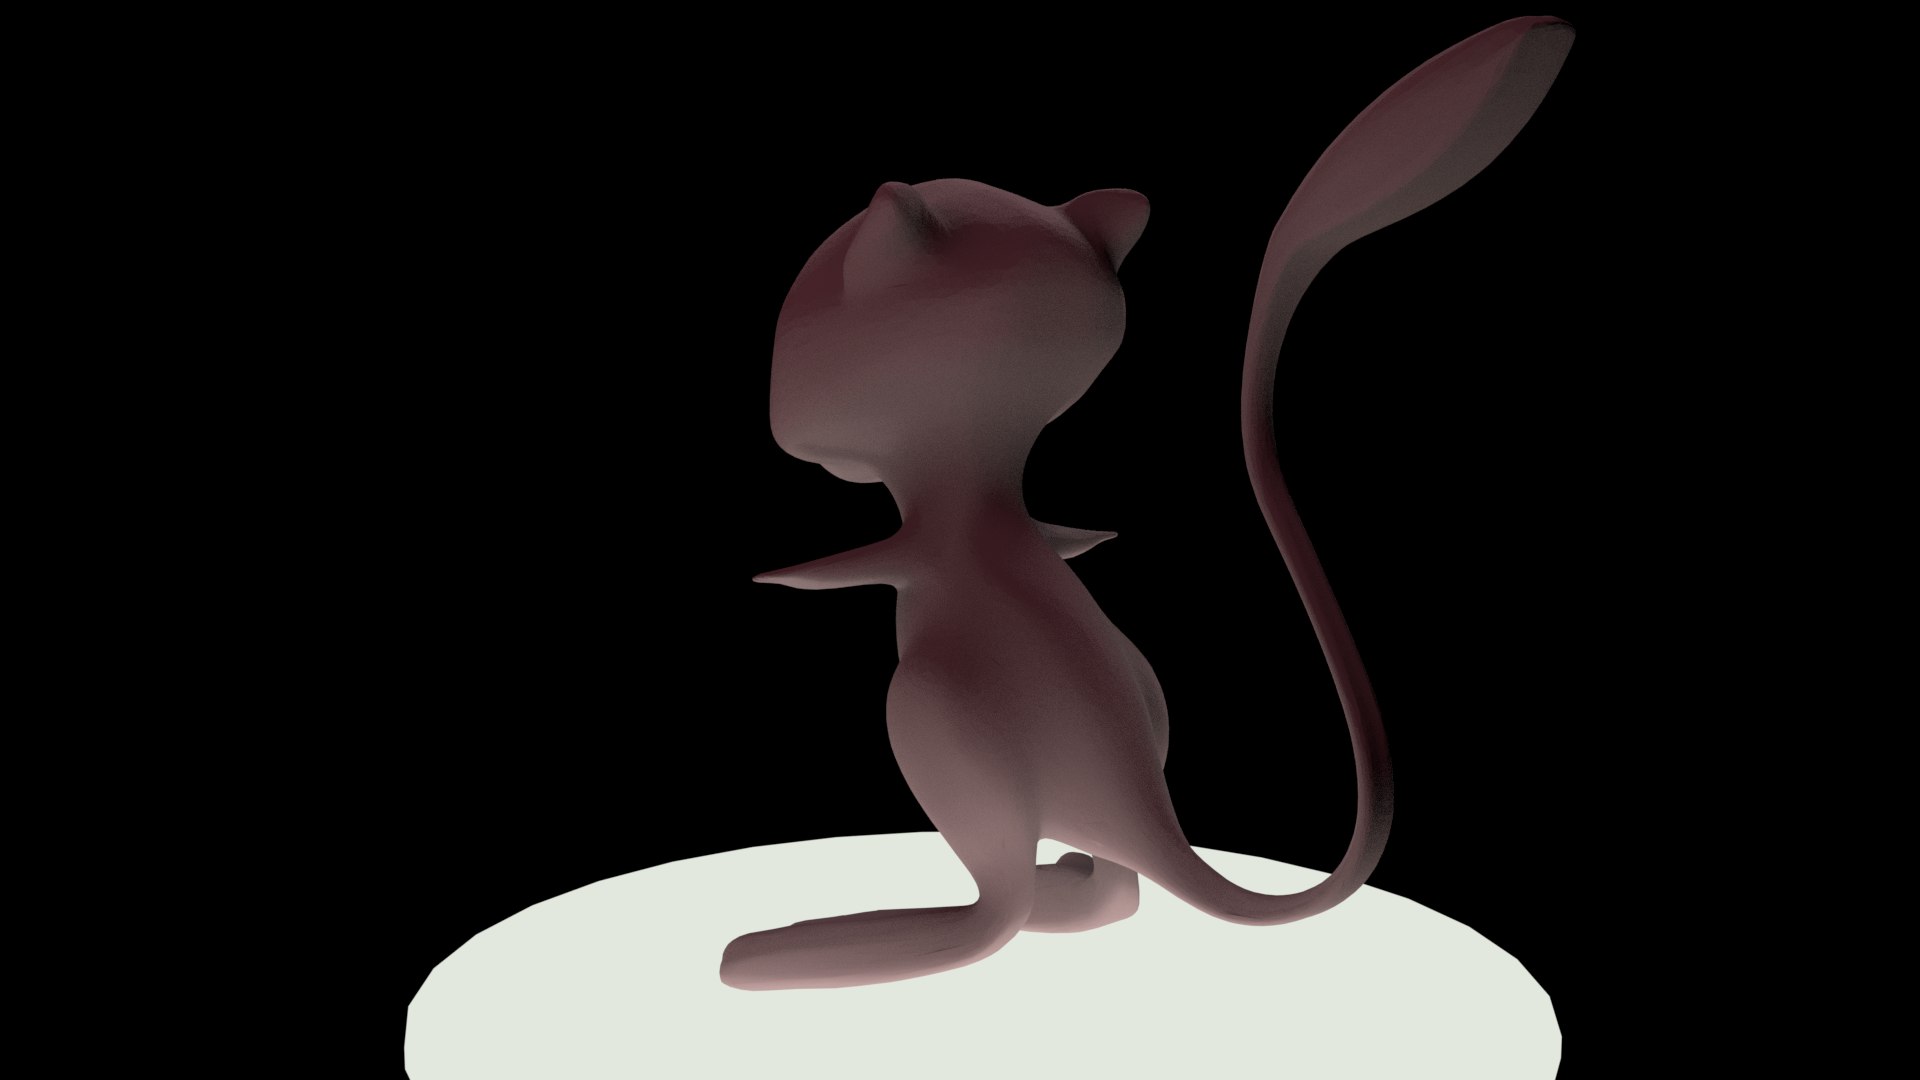 Mew(Pokemon), 3D models download